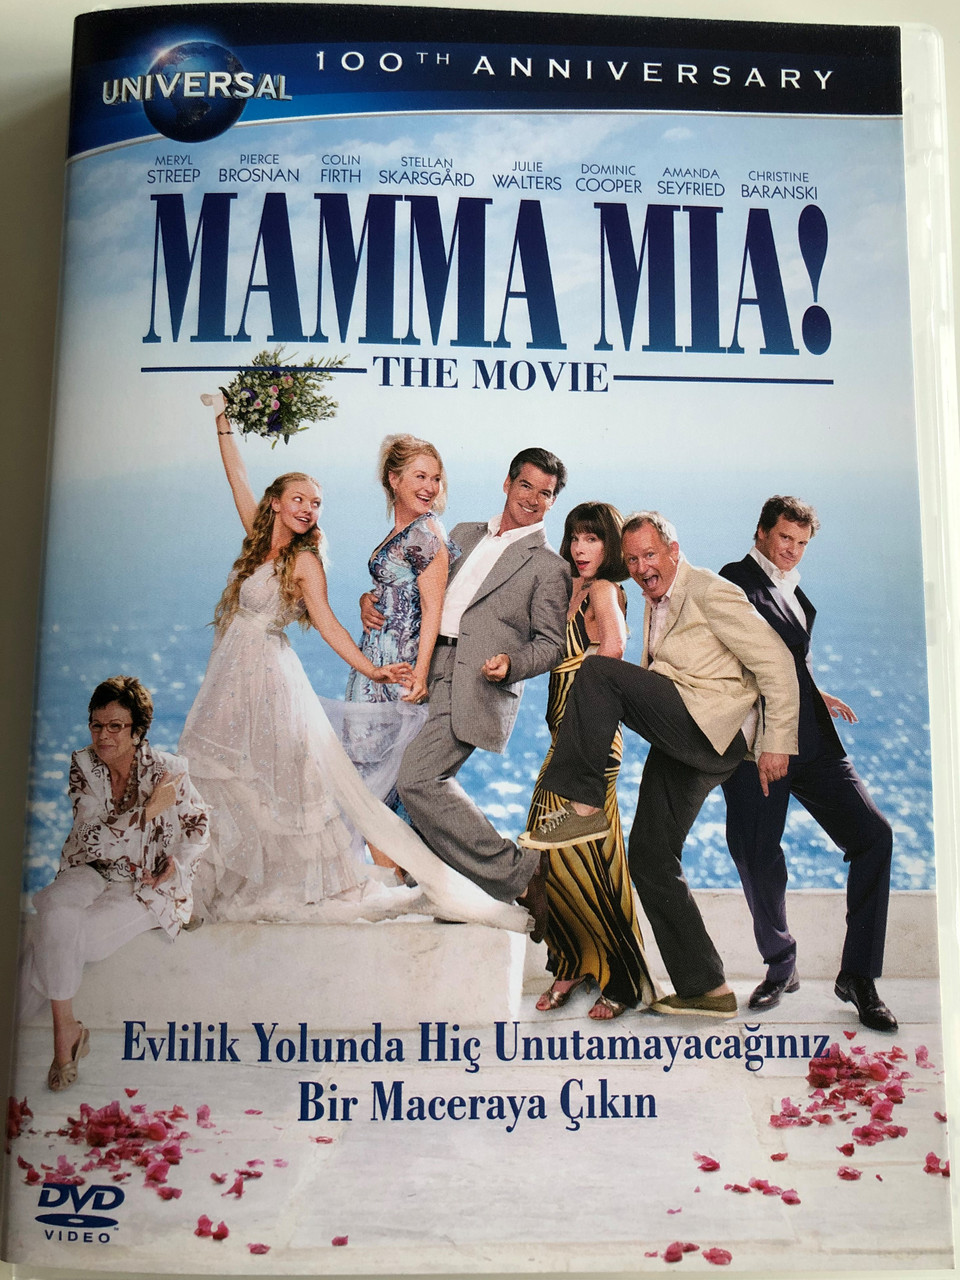 Mamma Mia! The Movie DVD 2008 100th Anniversary / Directed by Phyllida  Lloyd / Starring: Meryl Streep, Pierce Brosnan, Colin Firth, Stellan  Skarsgård, Julie Walters / Evlilik Yolunda Hic Unutamayacaginiz Bir  Maceraya Cikin - bibleinmylanguage